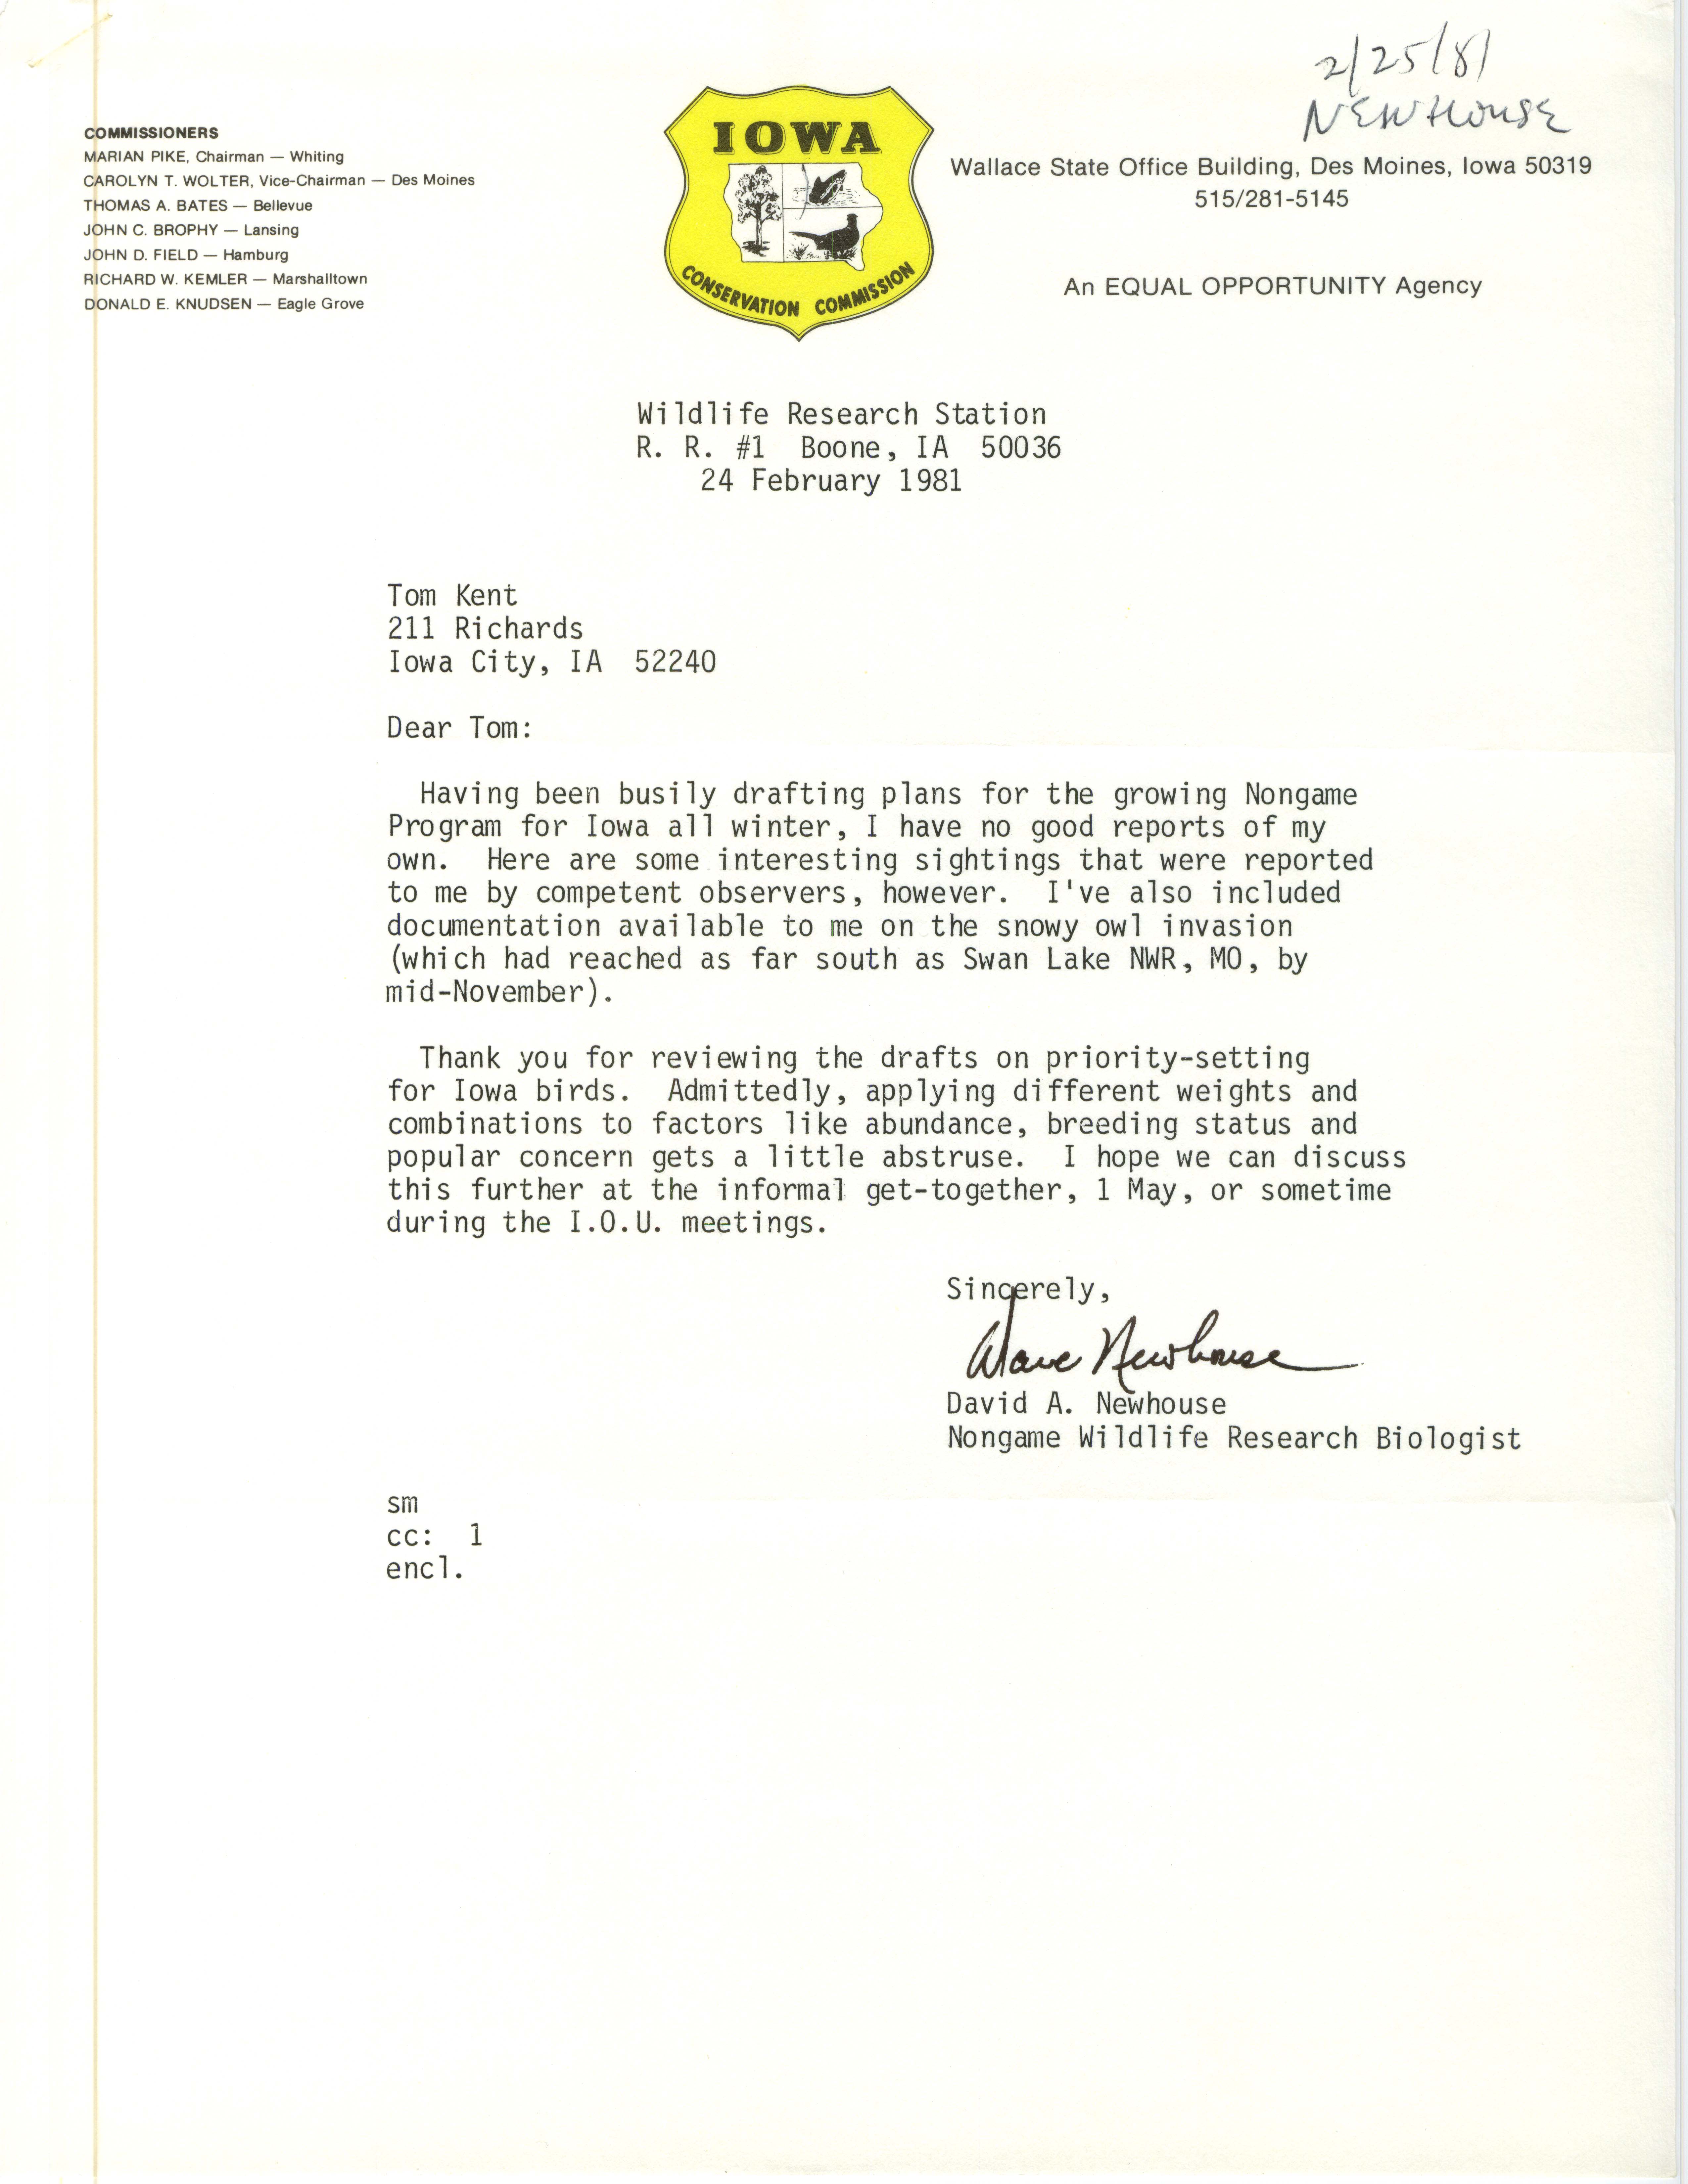 David A. Newhouse letter to Thomas Kent regarding winter bird sightings, February 24, 1981